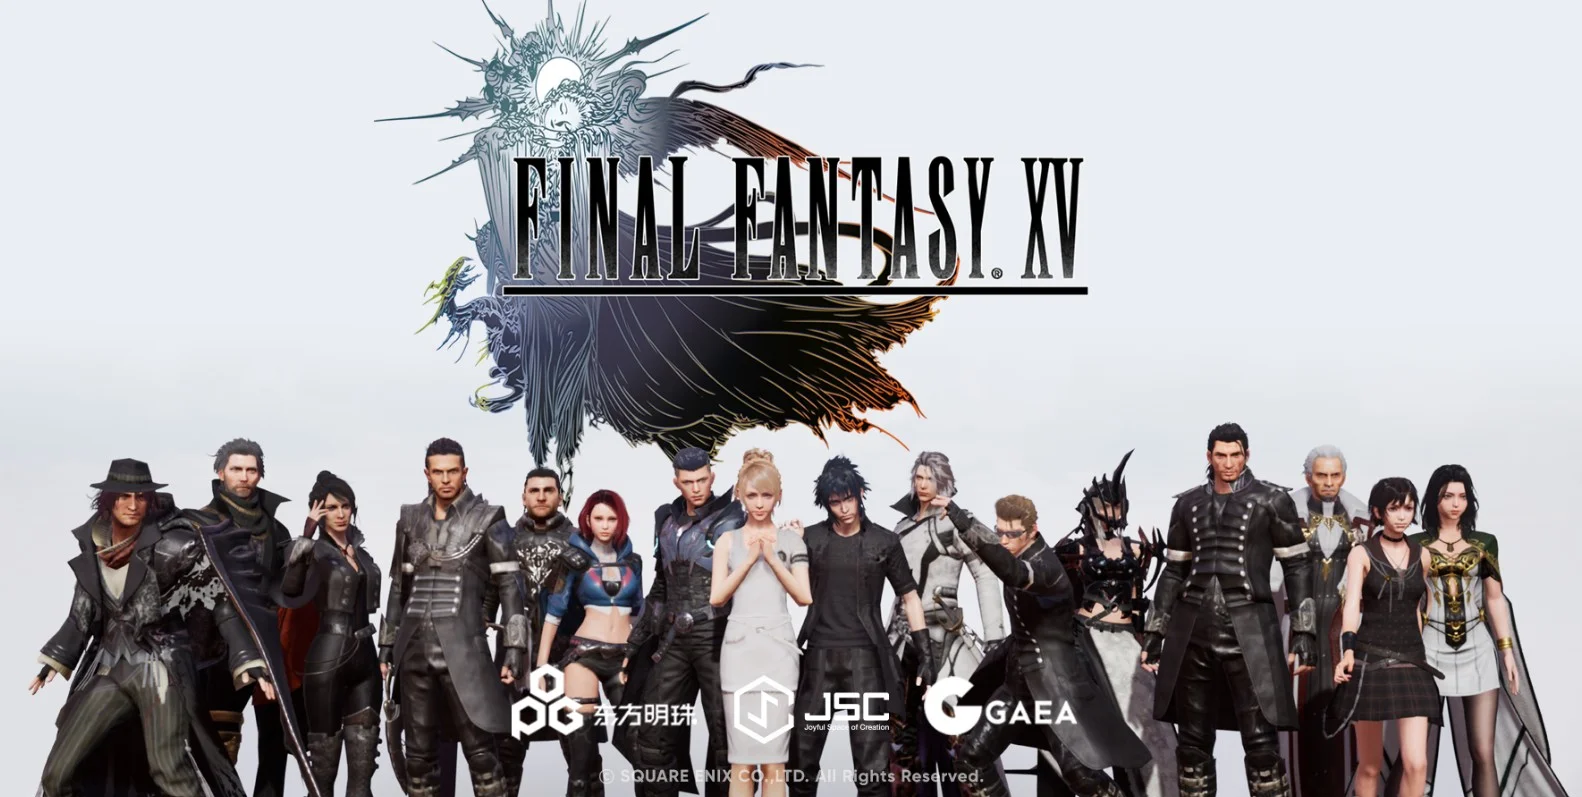 Square Enix работает над мобильной MMORPG по Final Fantasy XV на Unreal Engine 4 - фото 1